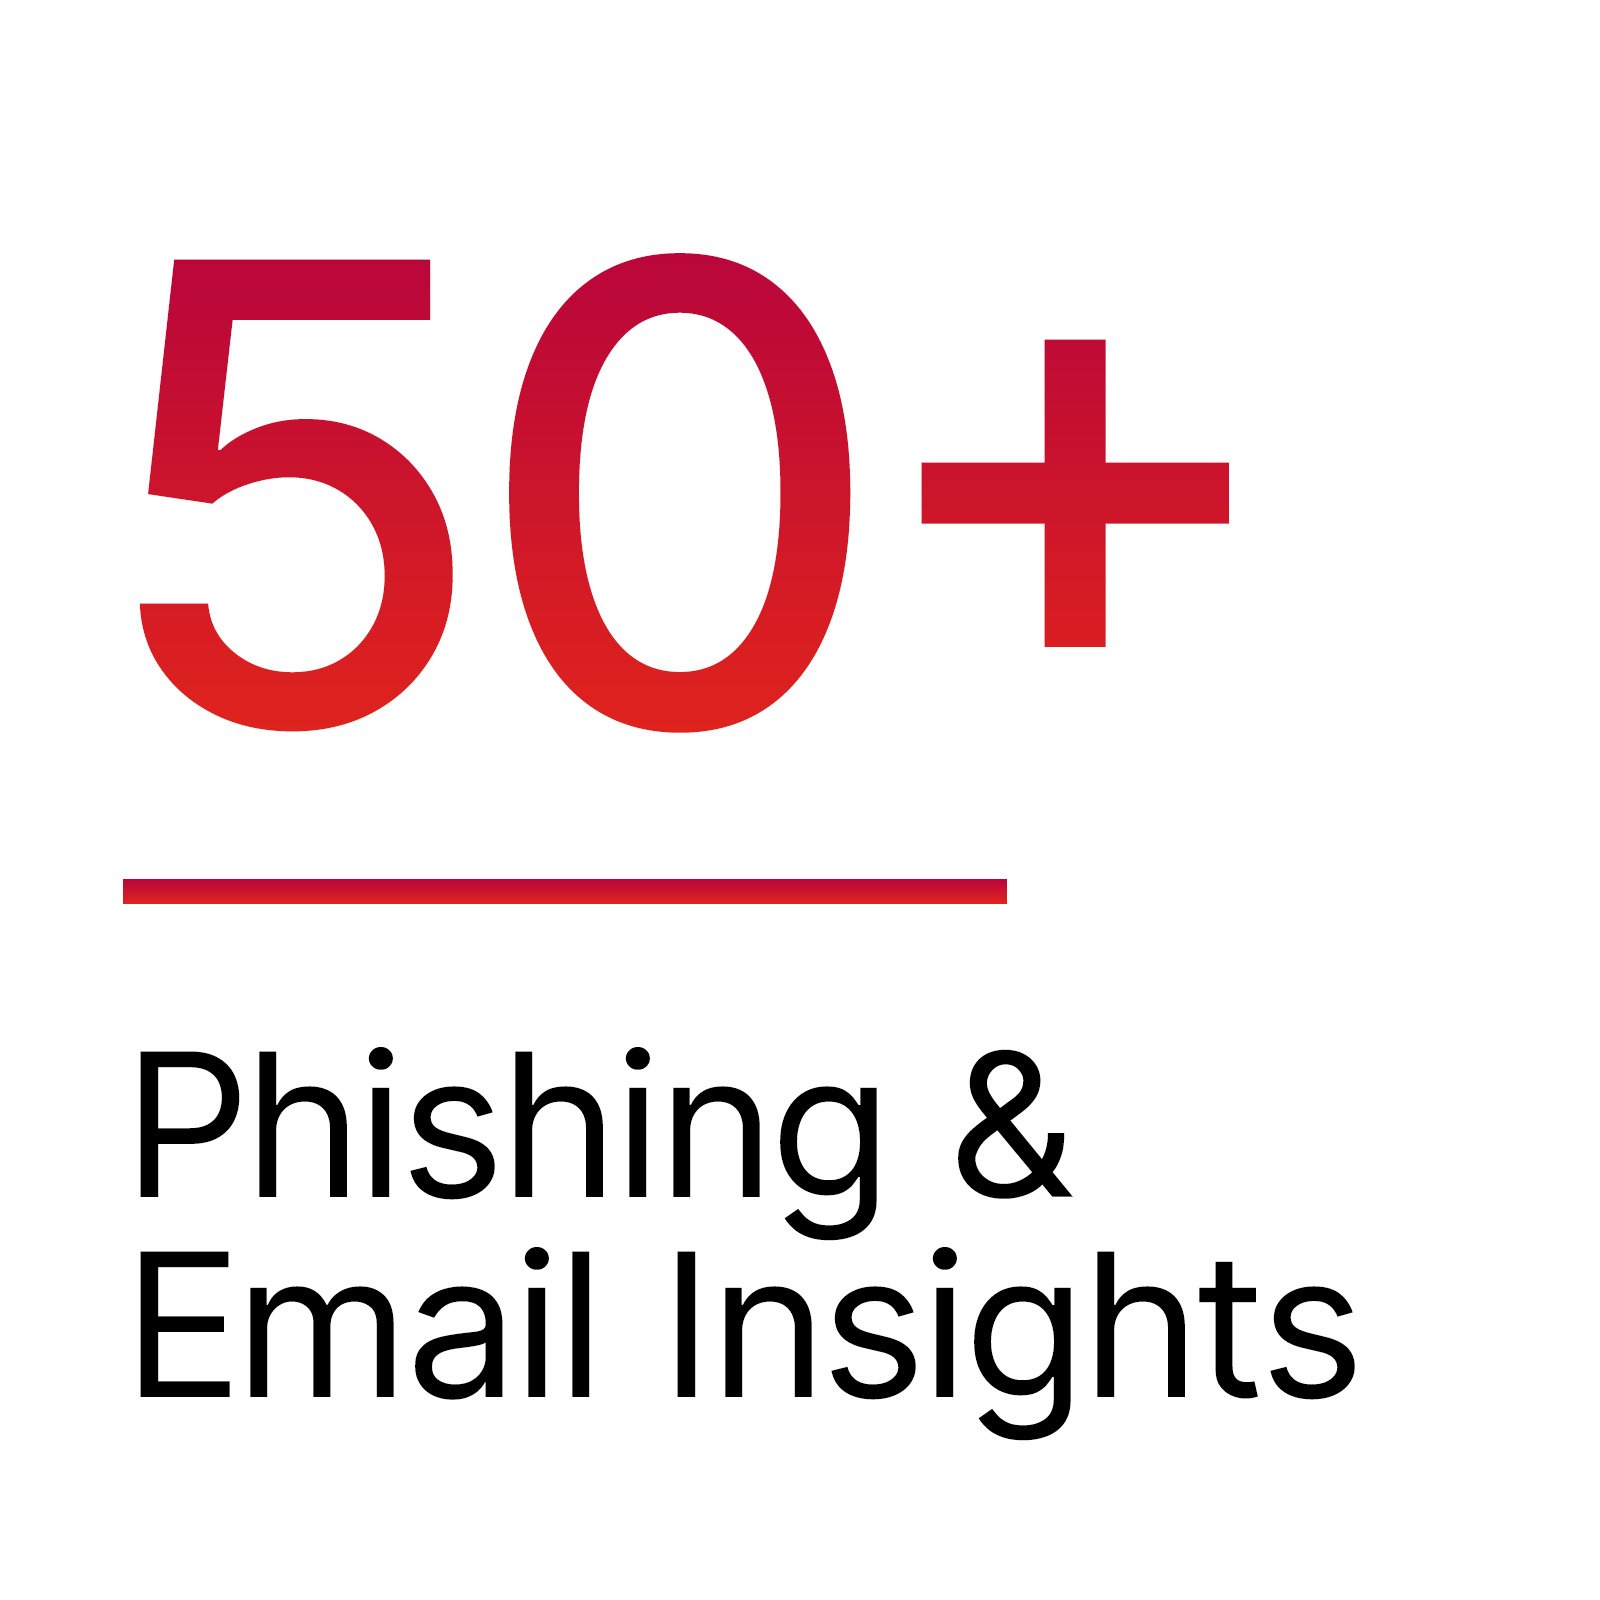 phishing-insights